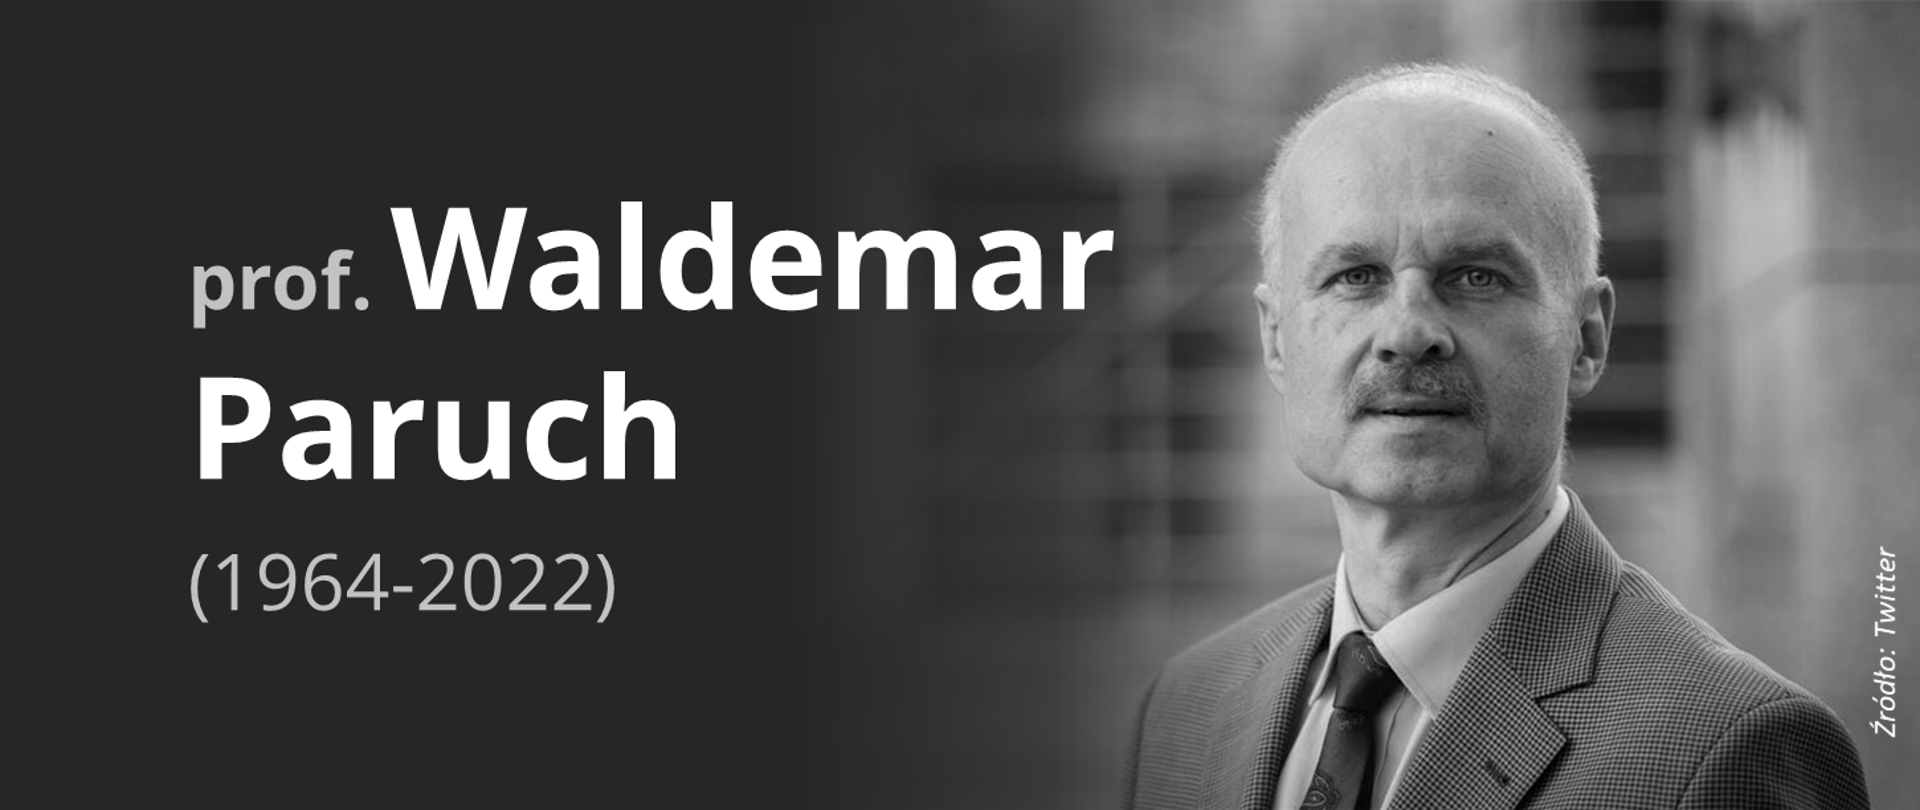 prof. Waldemar Paruch (1964-2022)